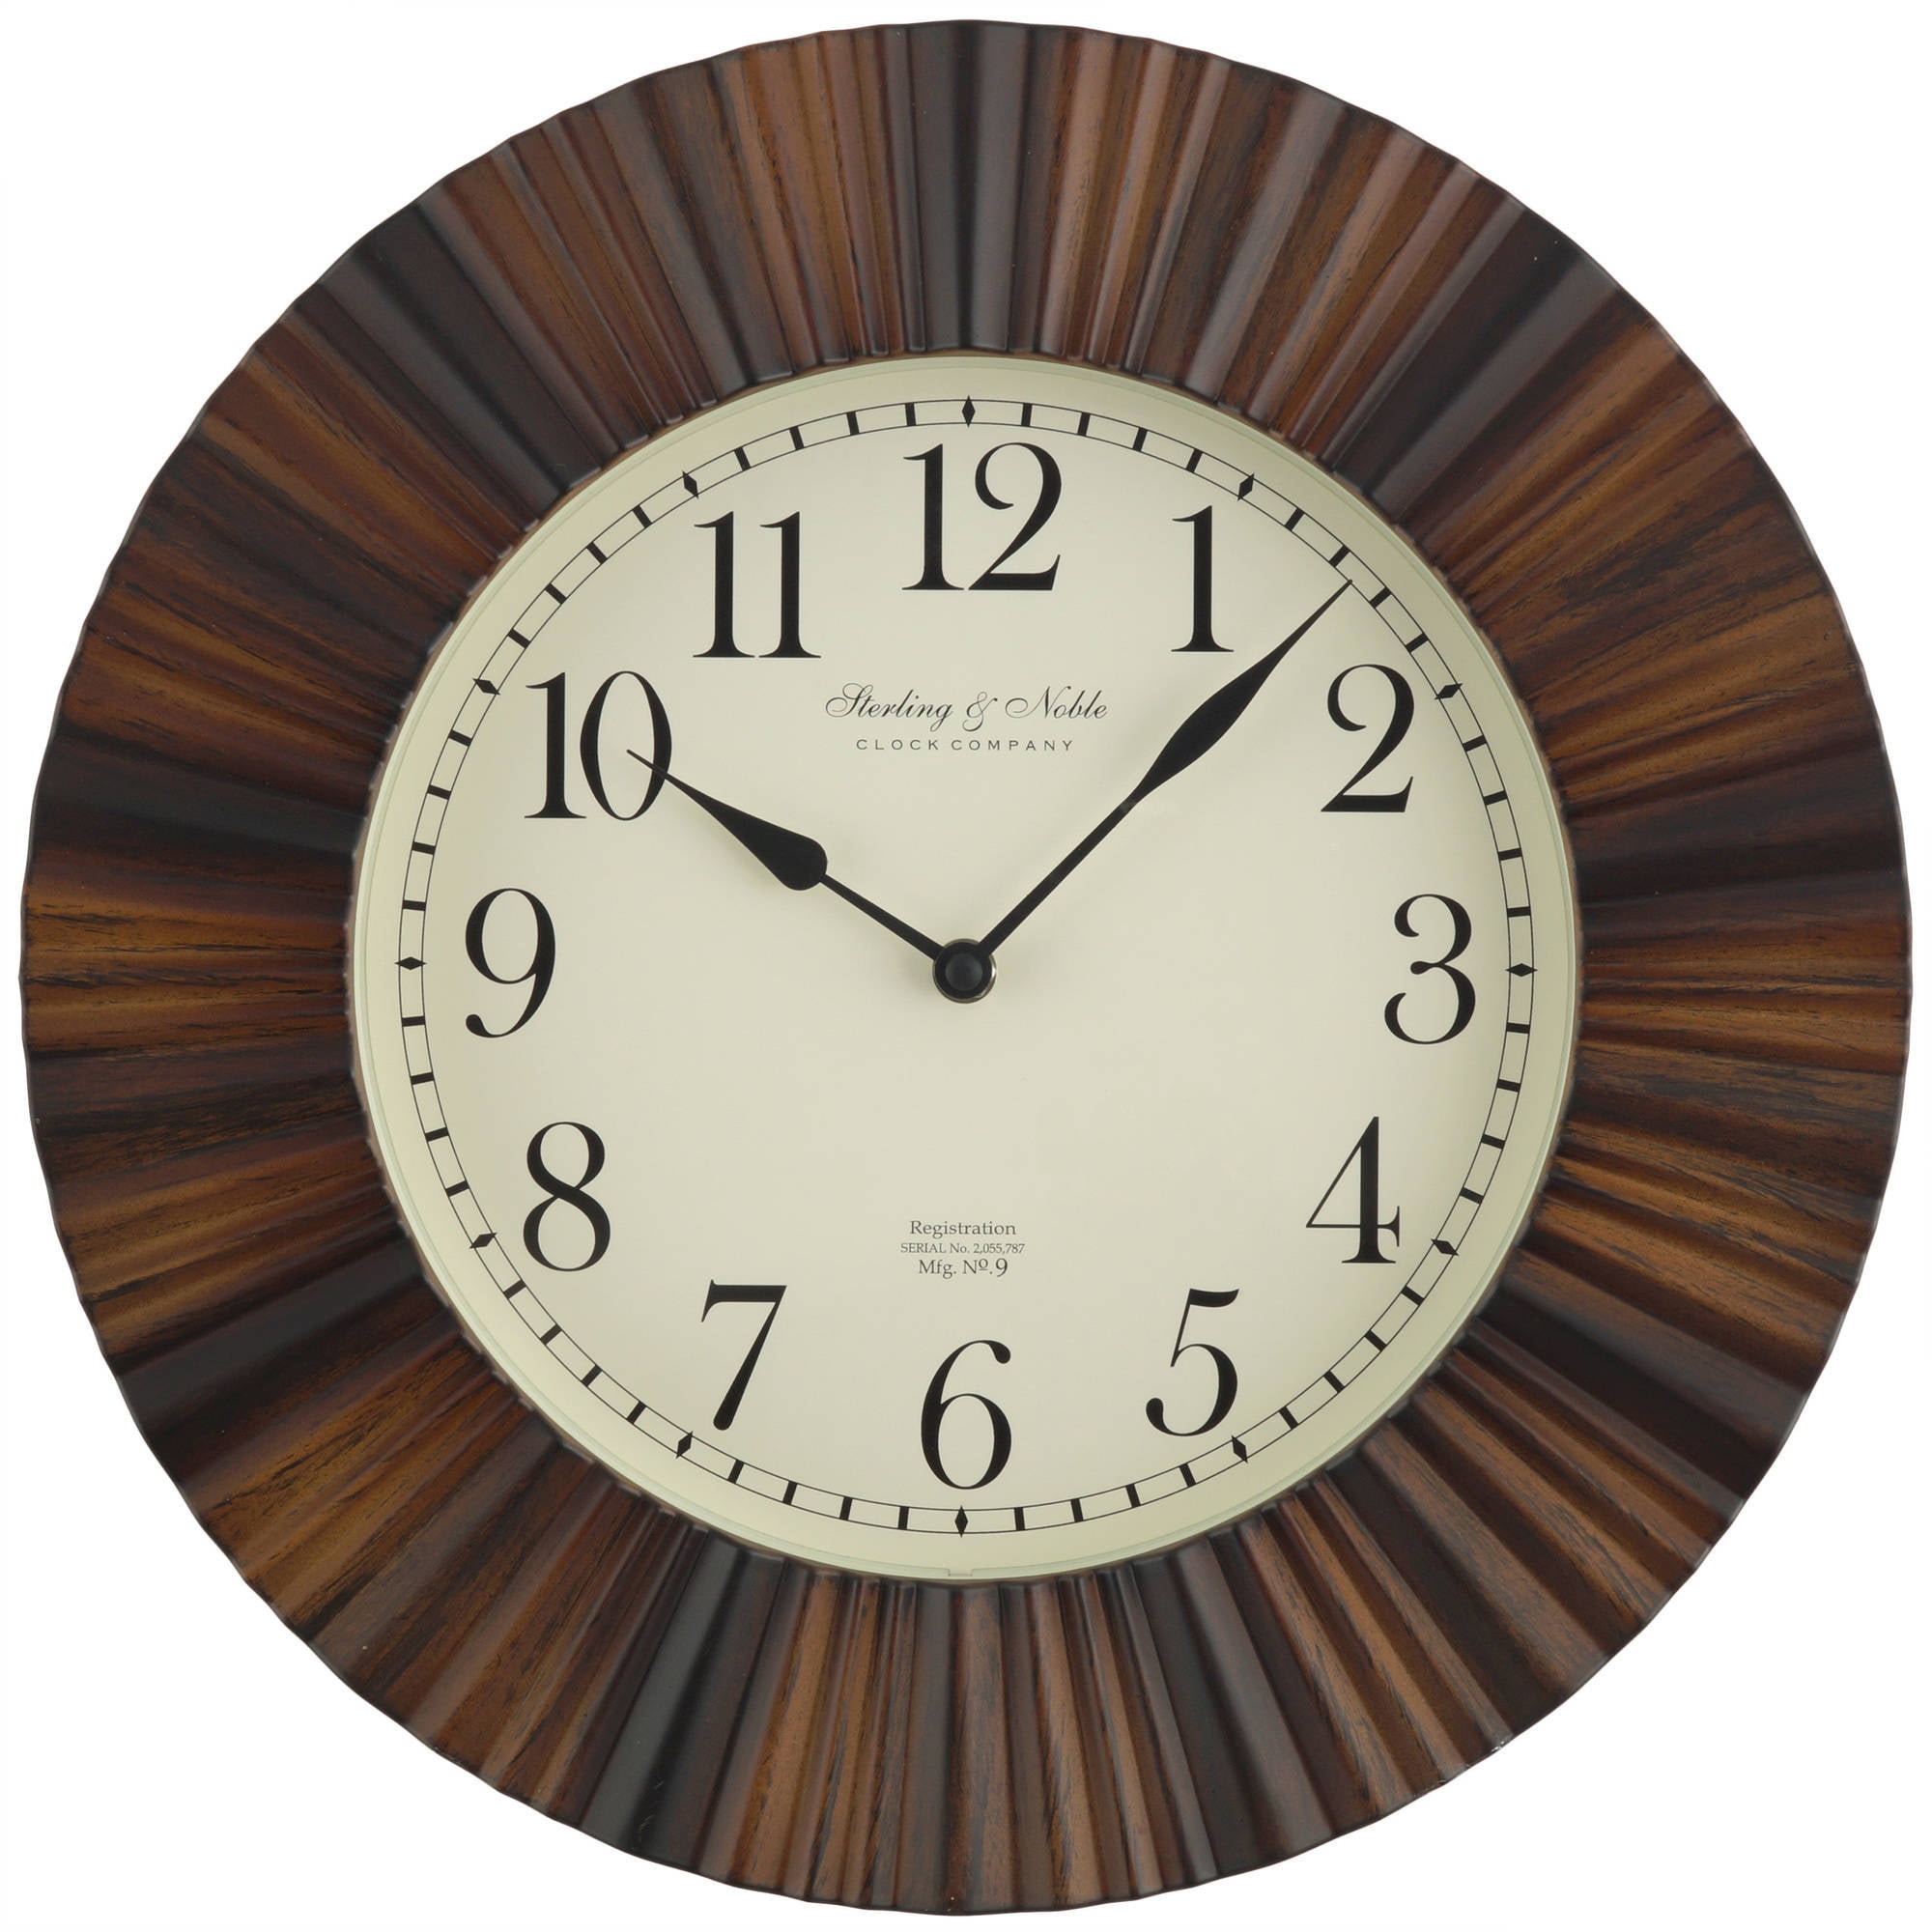 16" Lattice Plastic Analog Wall Clock Details about   BBB86507 La Crosse Clock Co Brown 